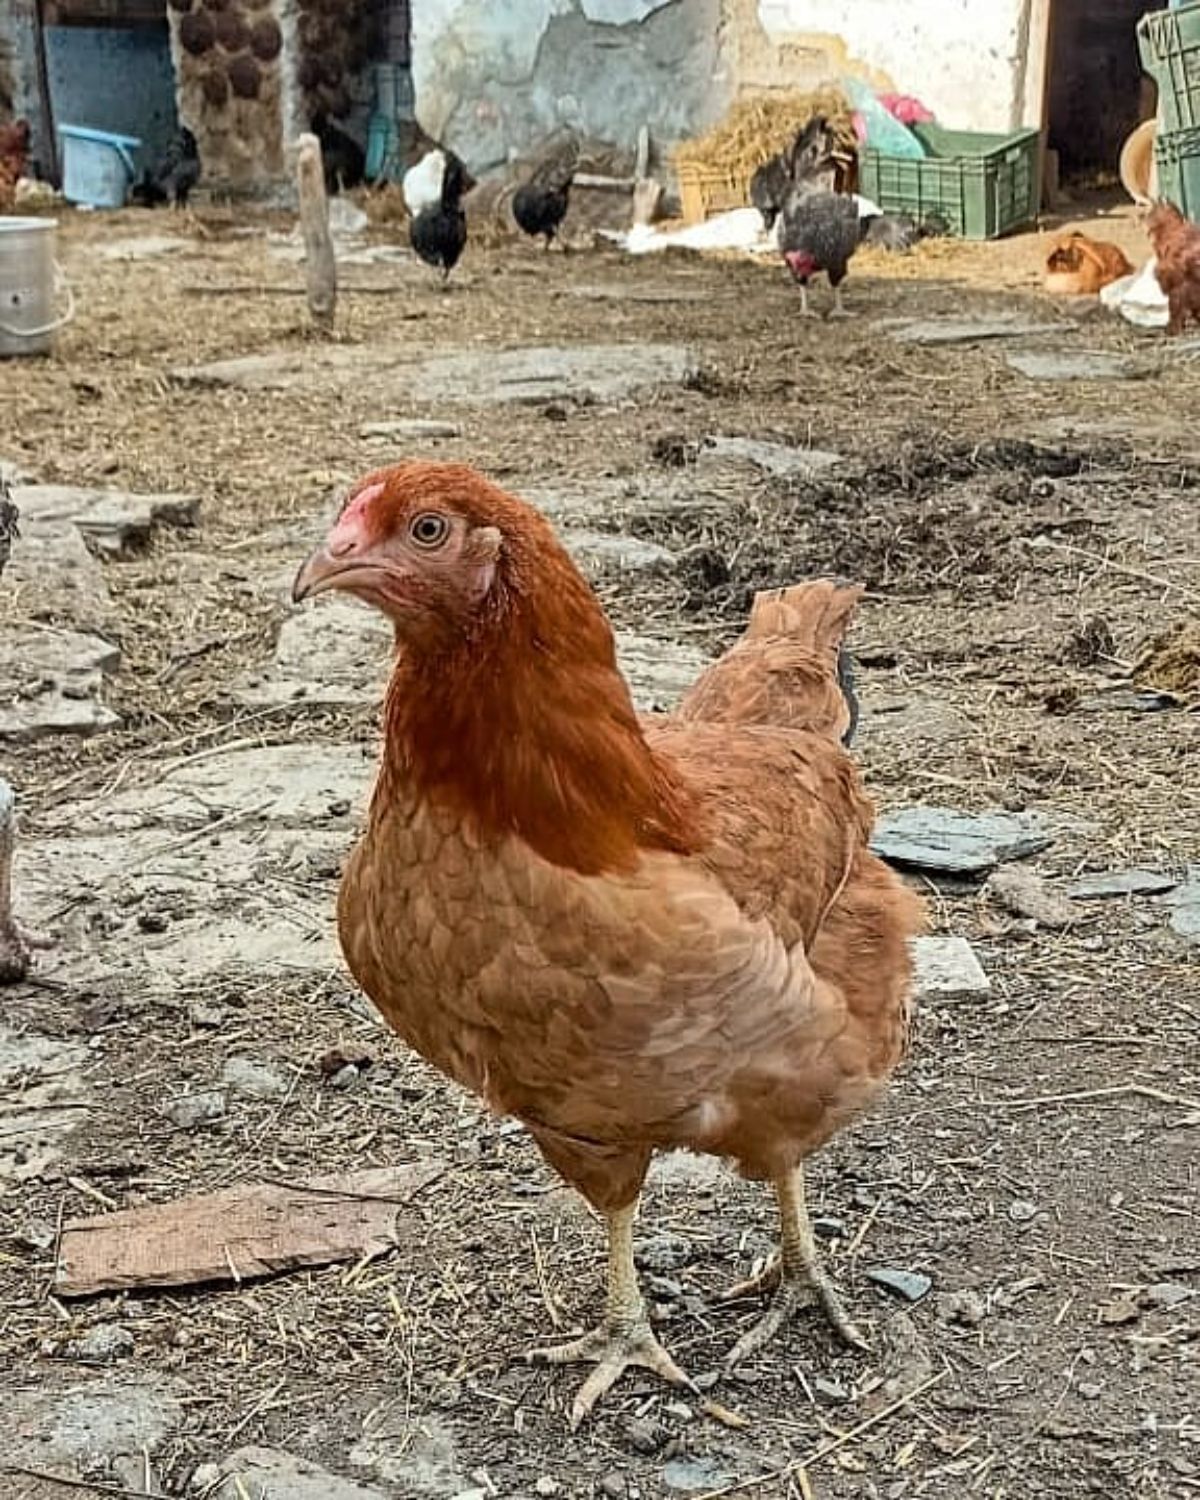 An adorable brown Kuroiler hen wandering in a backyard.